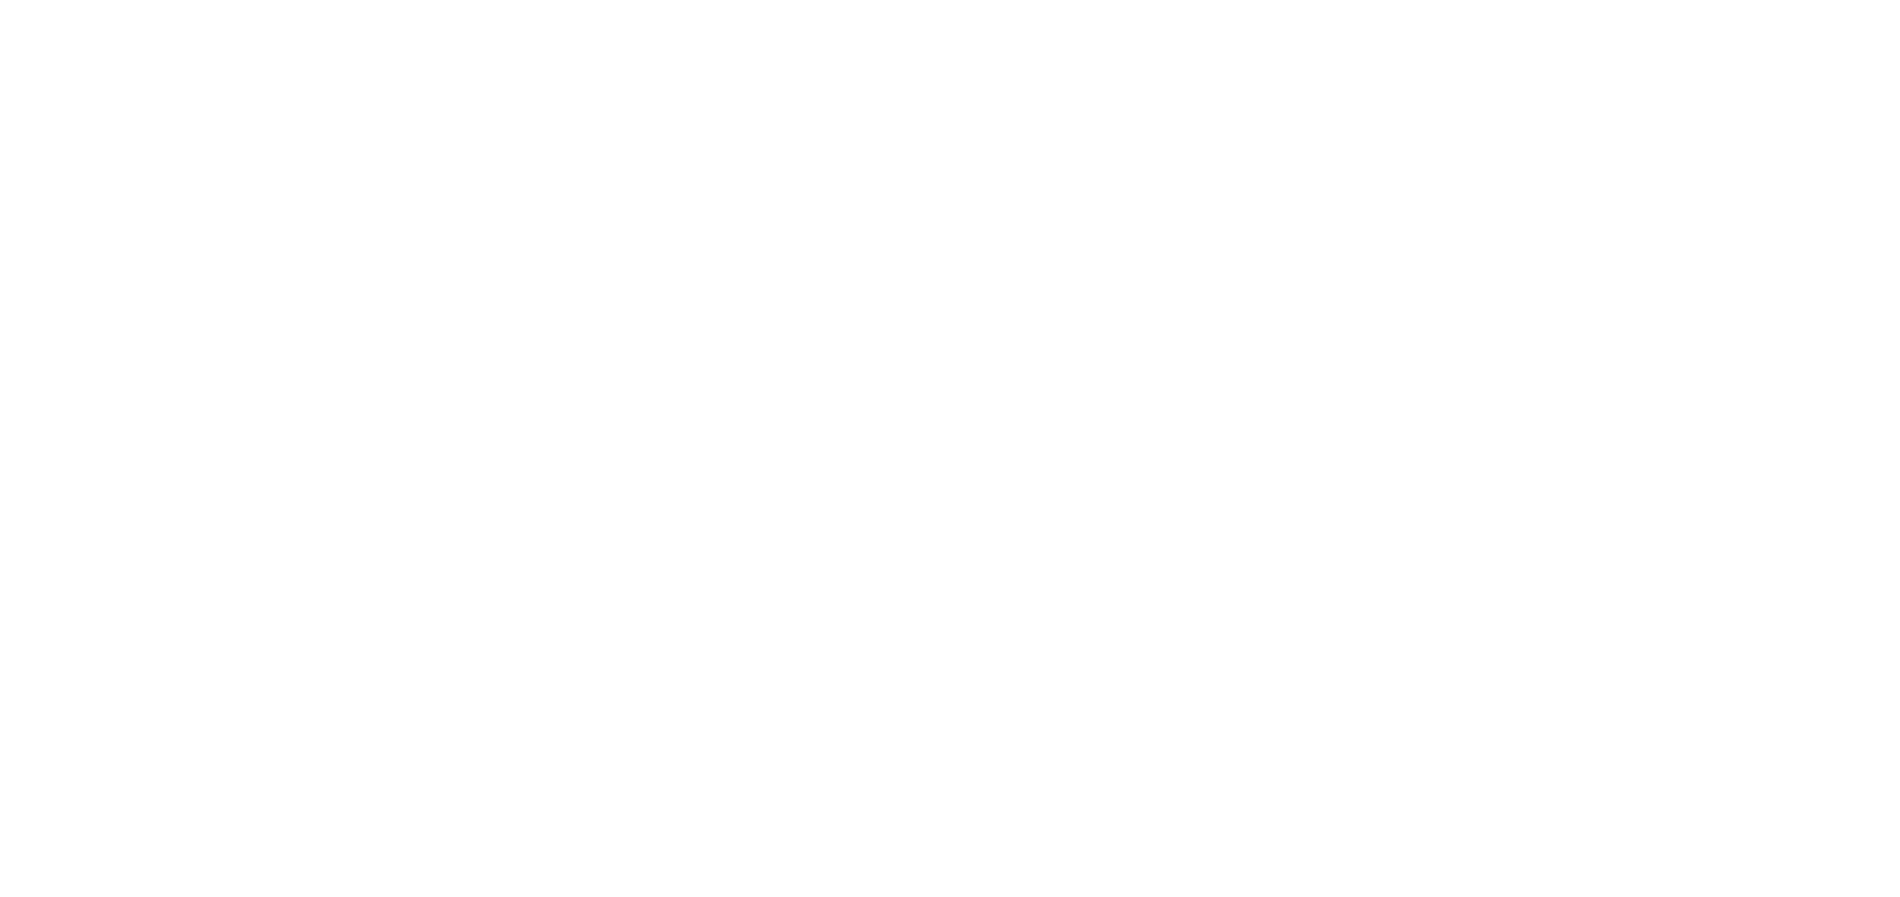 How much will tattoo cost? - Gargoyle Tattoo Auckland